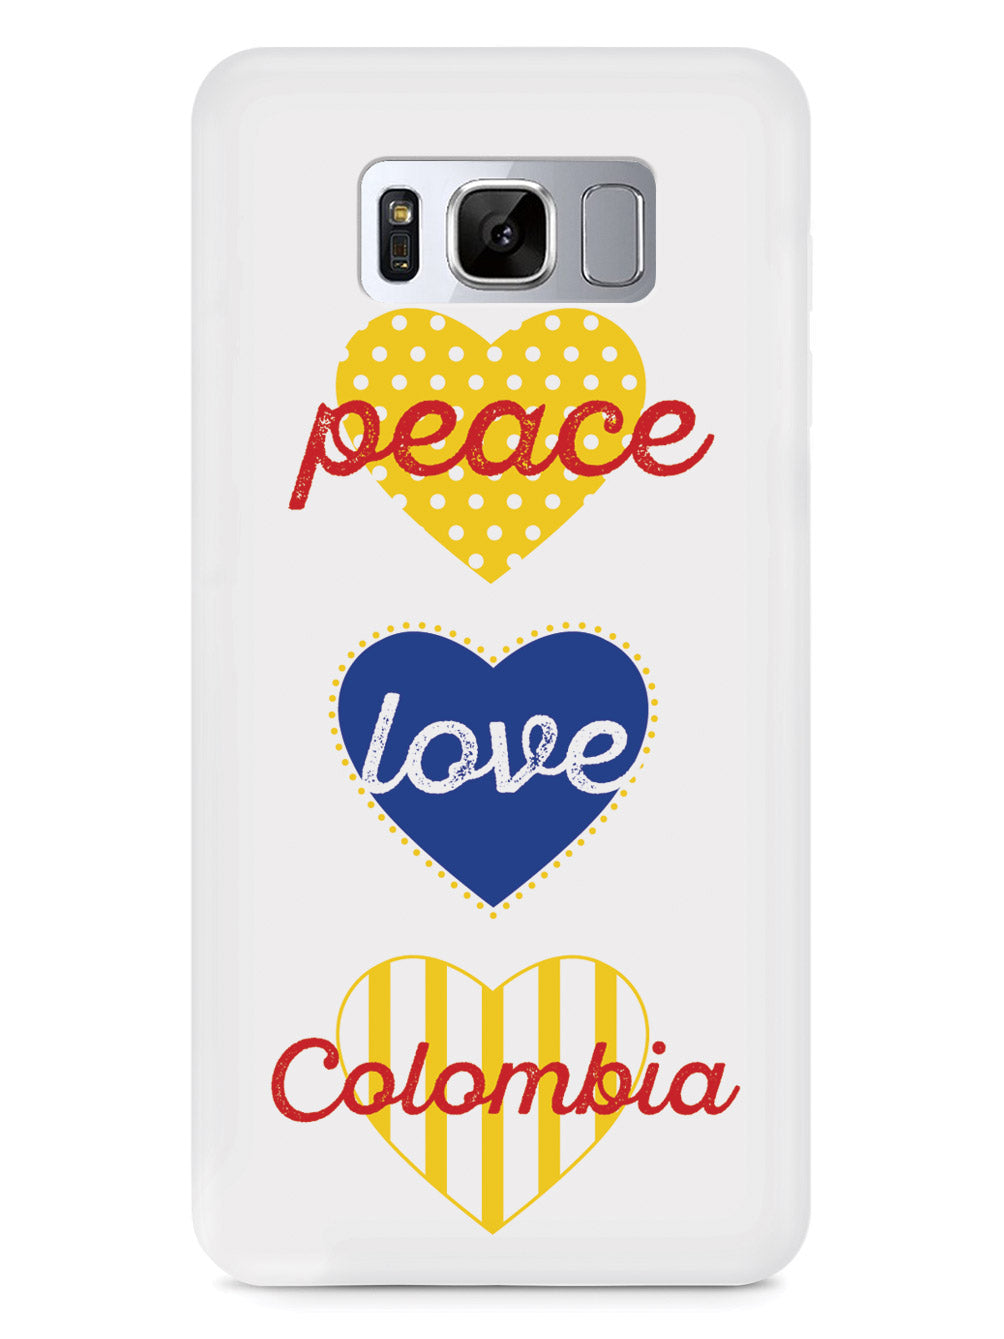 Peace Love Colombia Case